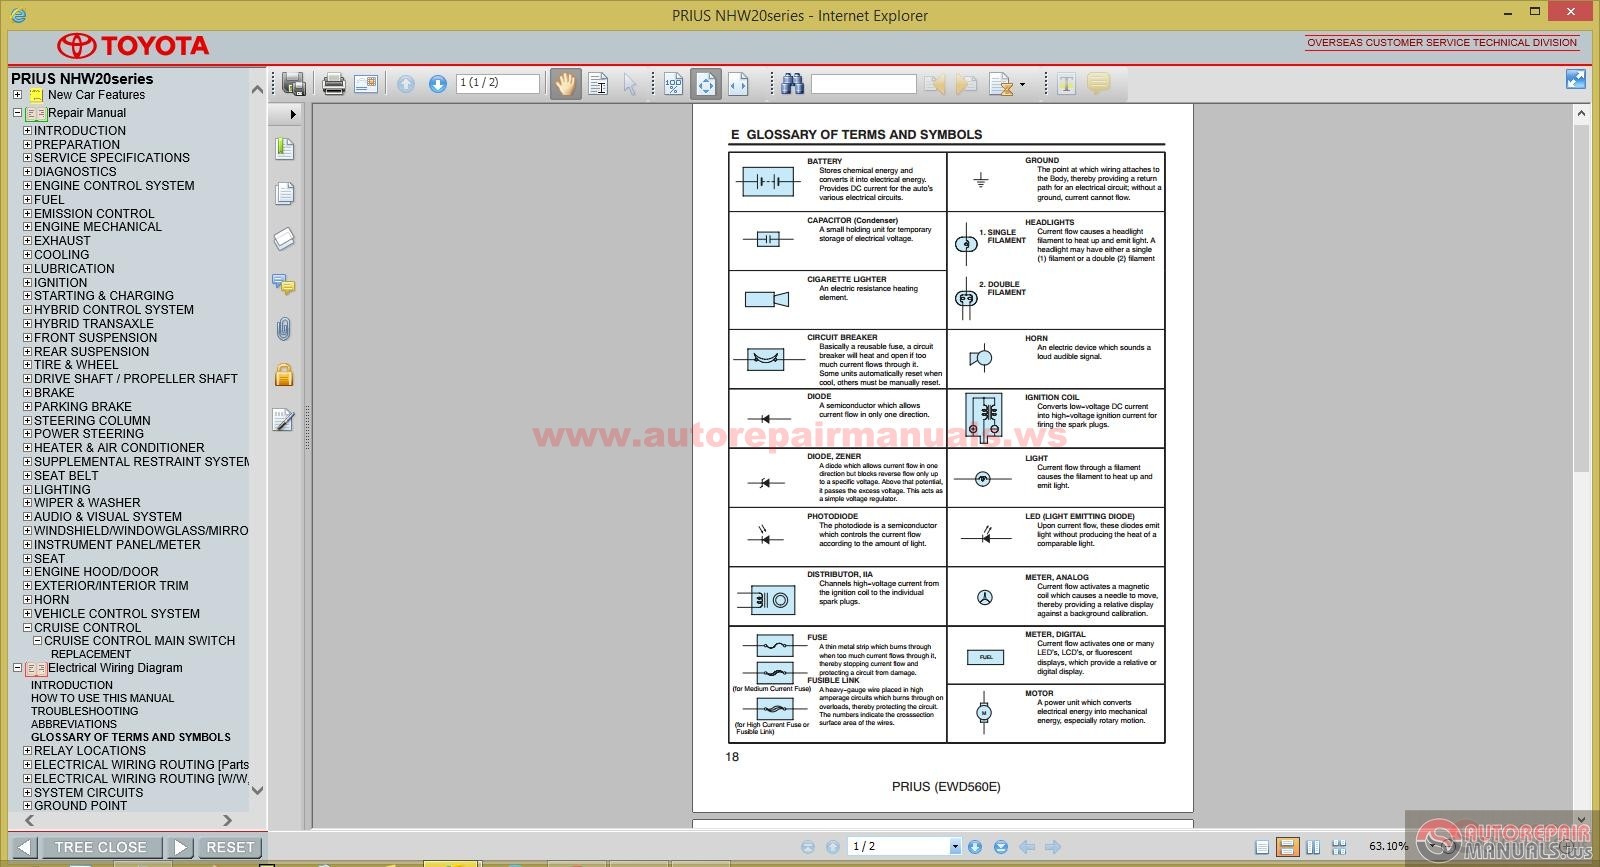 2003 toyota matrix owners manual pdf #5